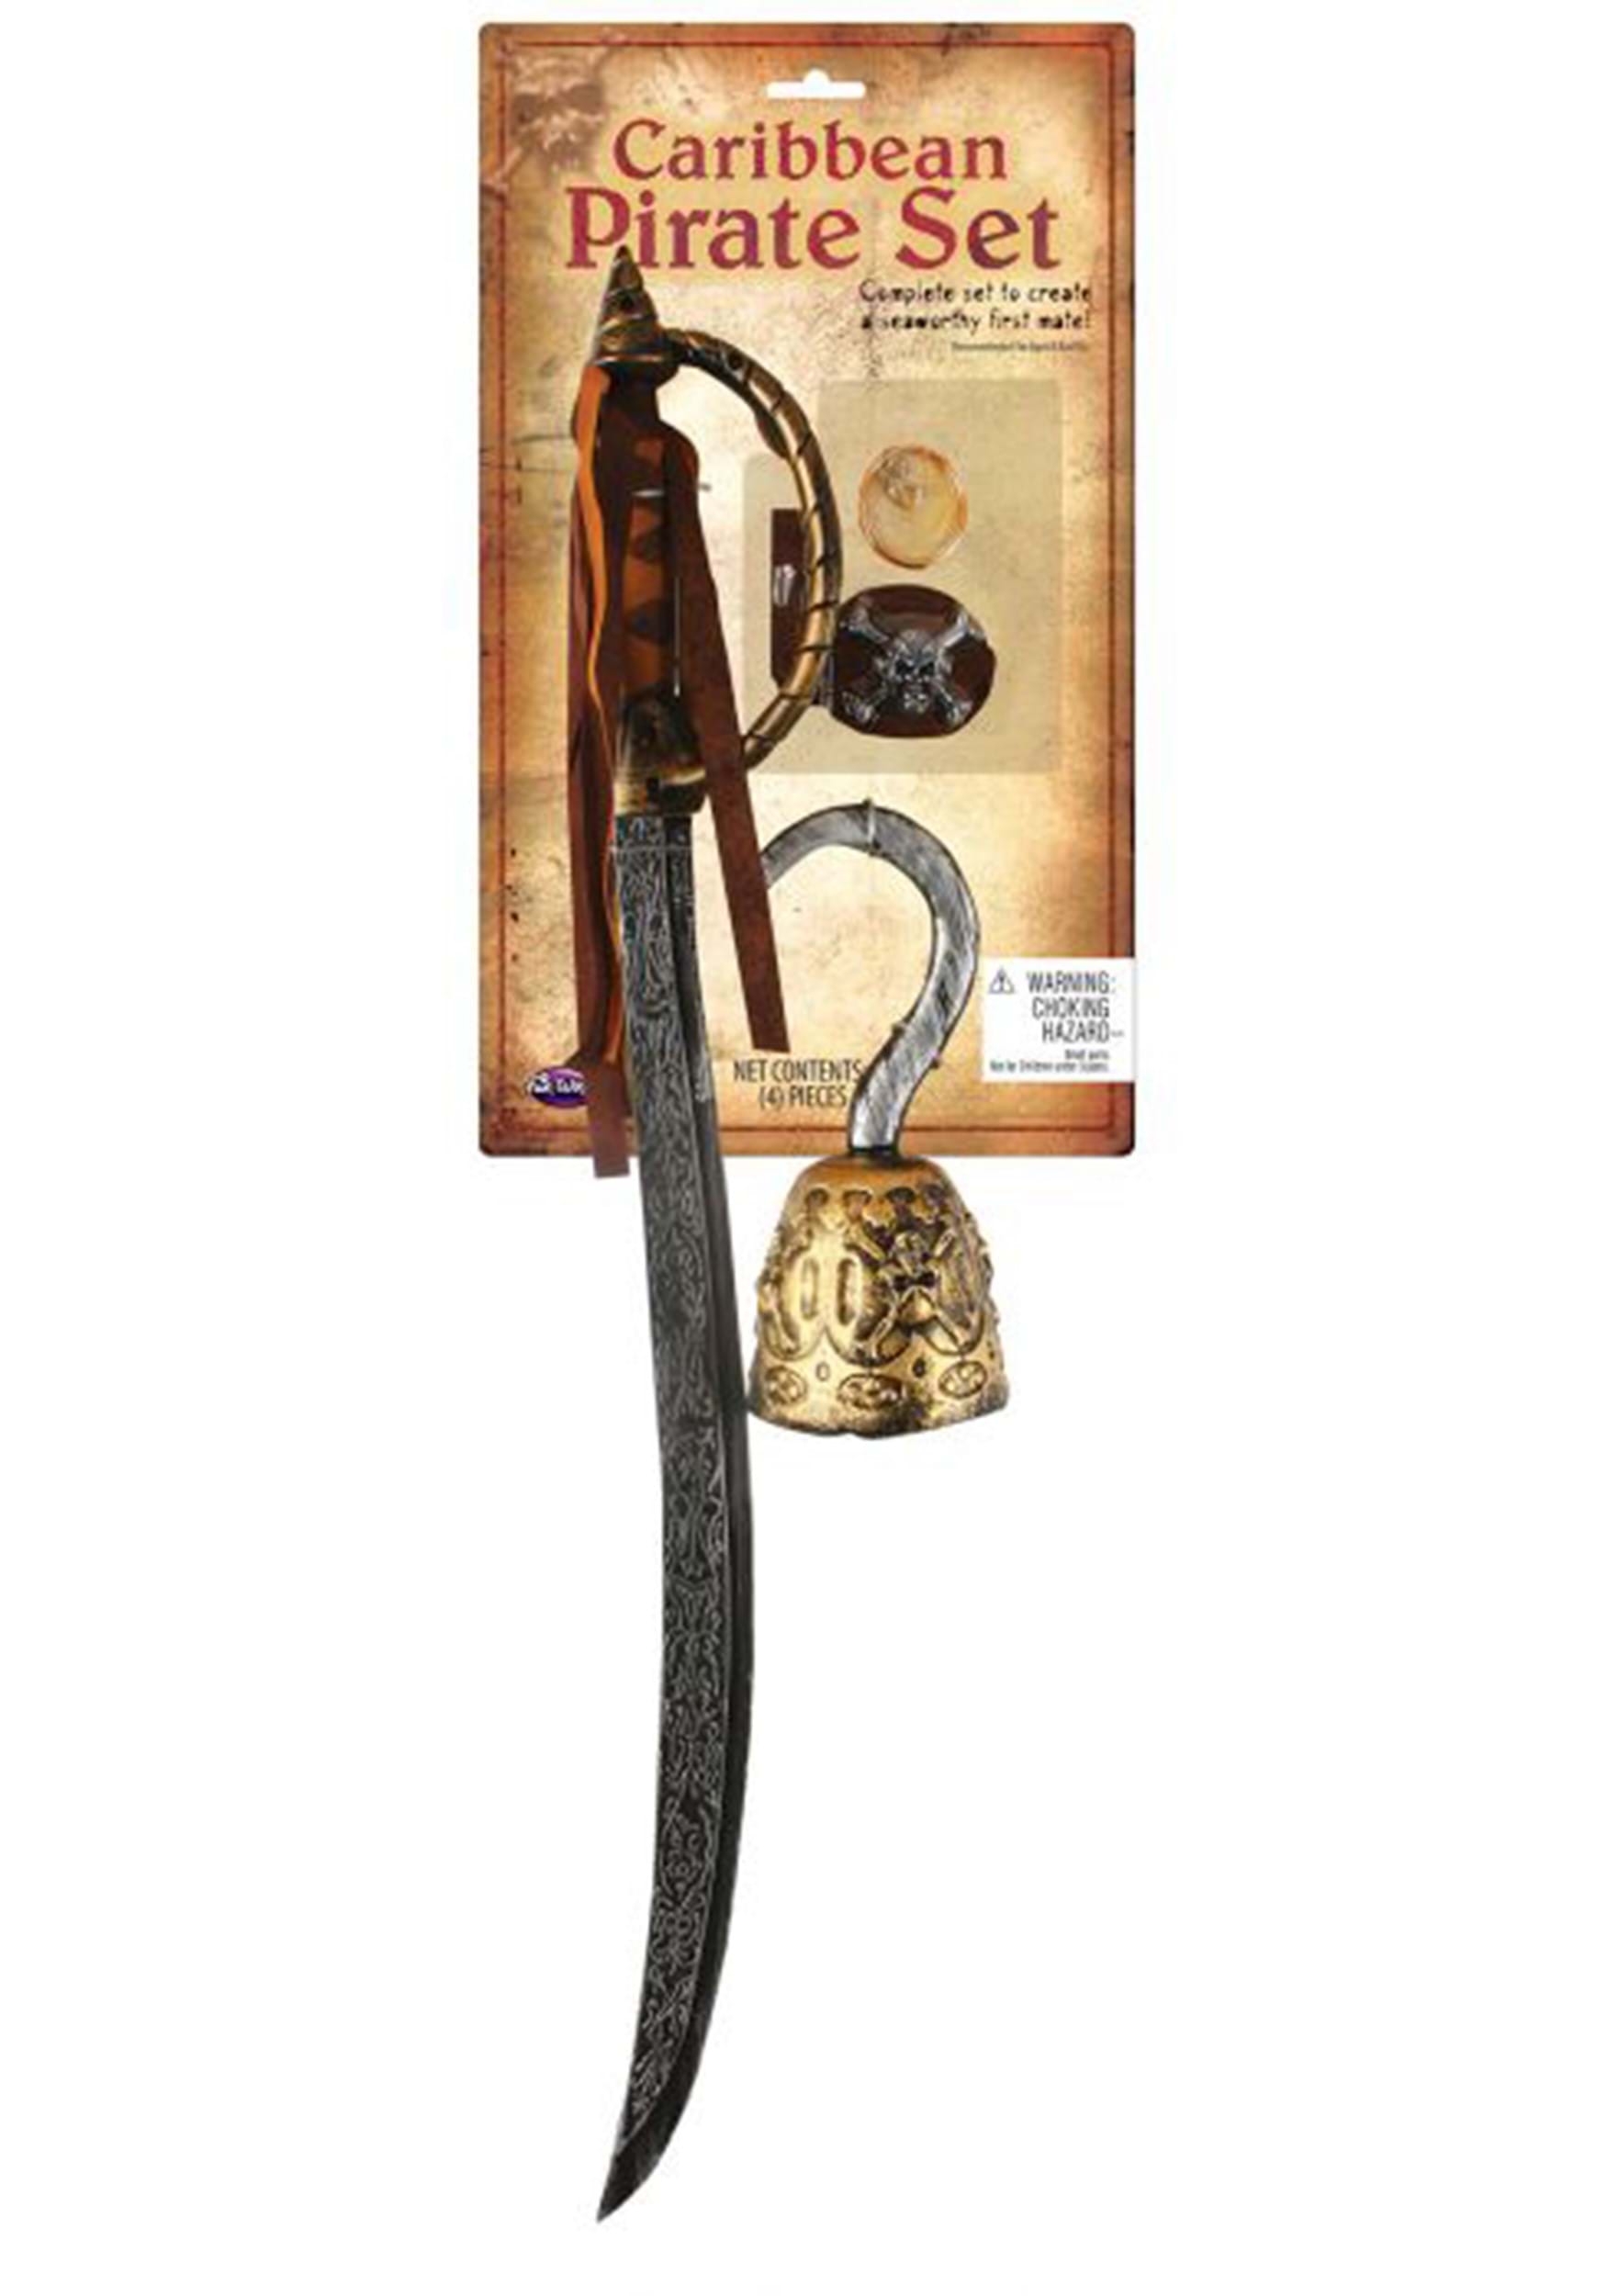 Caribbean Pirate Sword & Accessory Kit